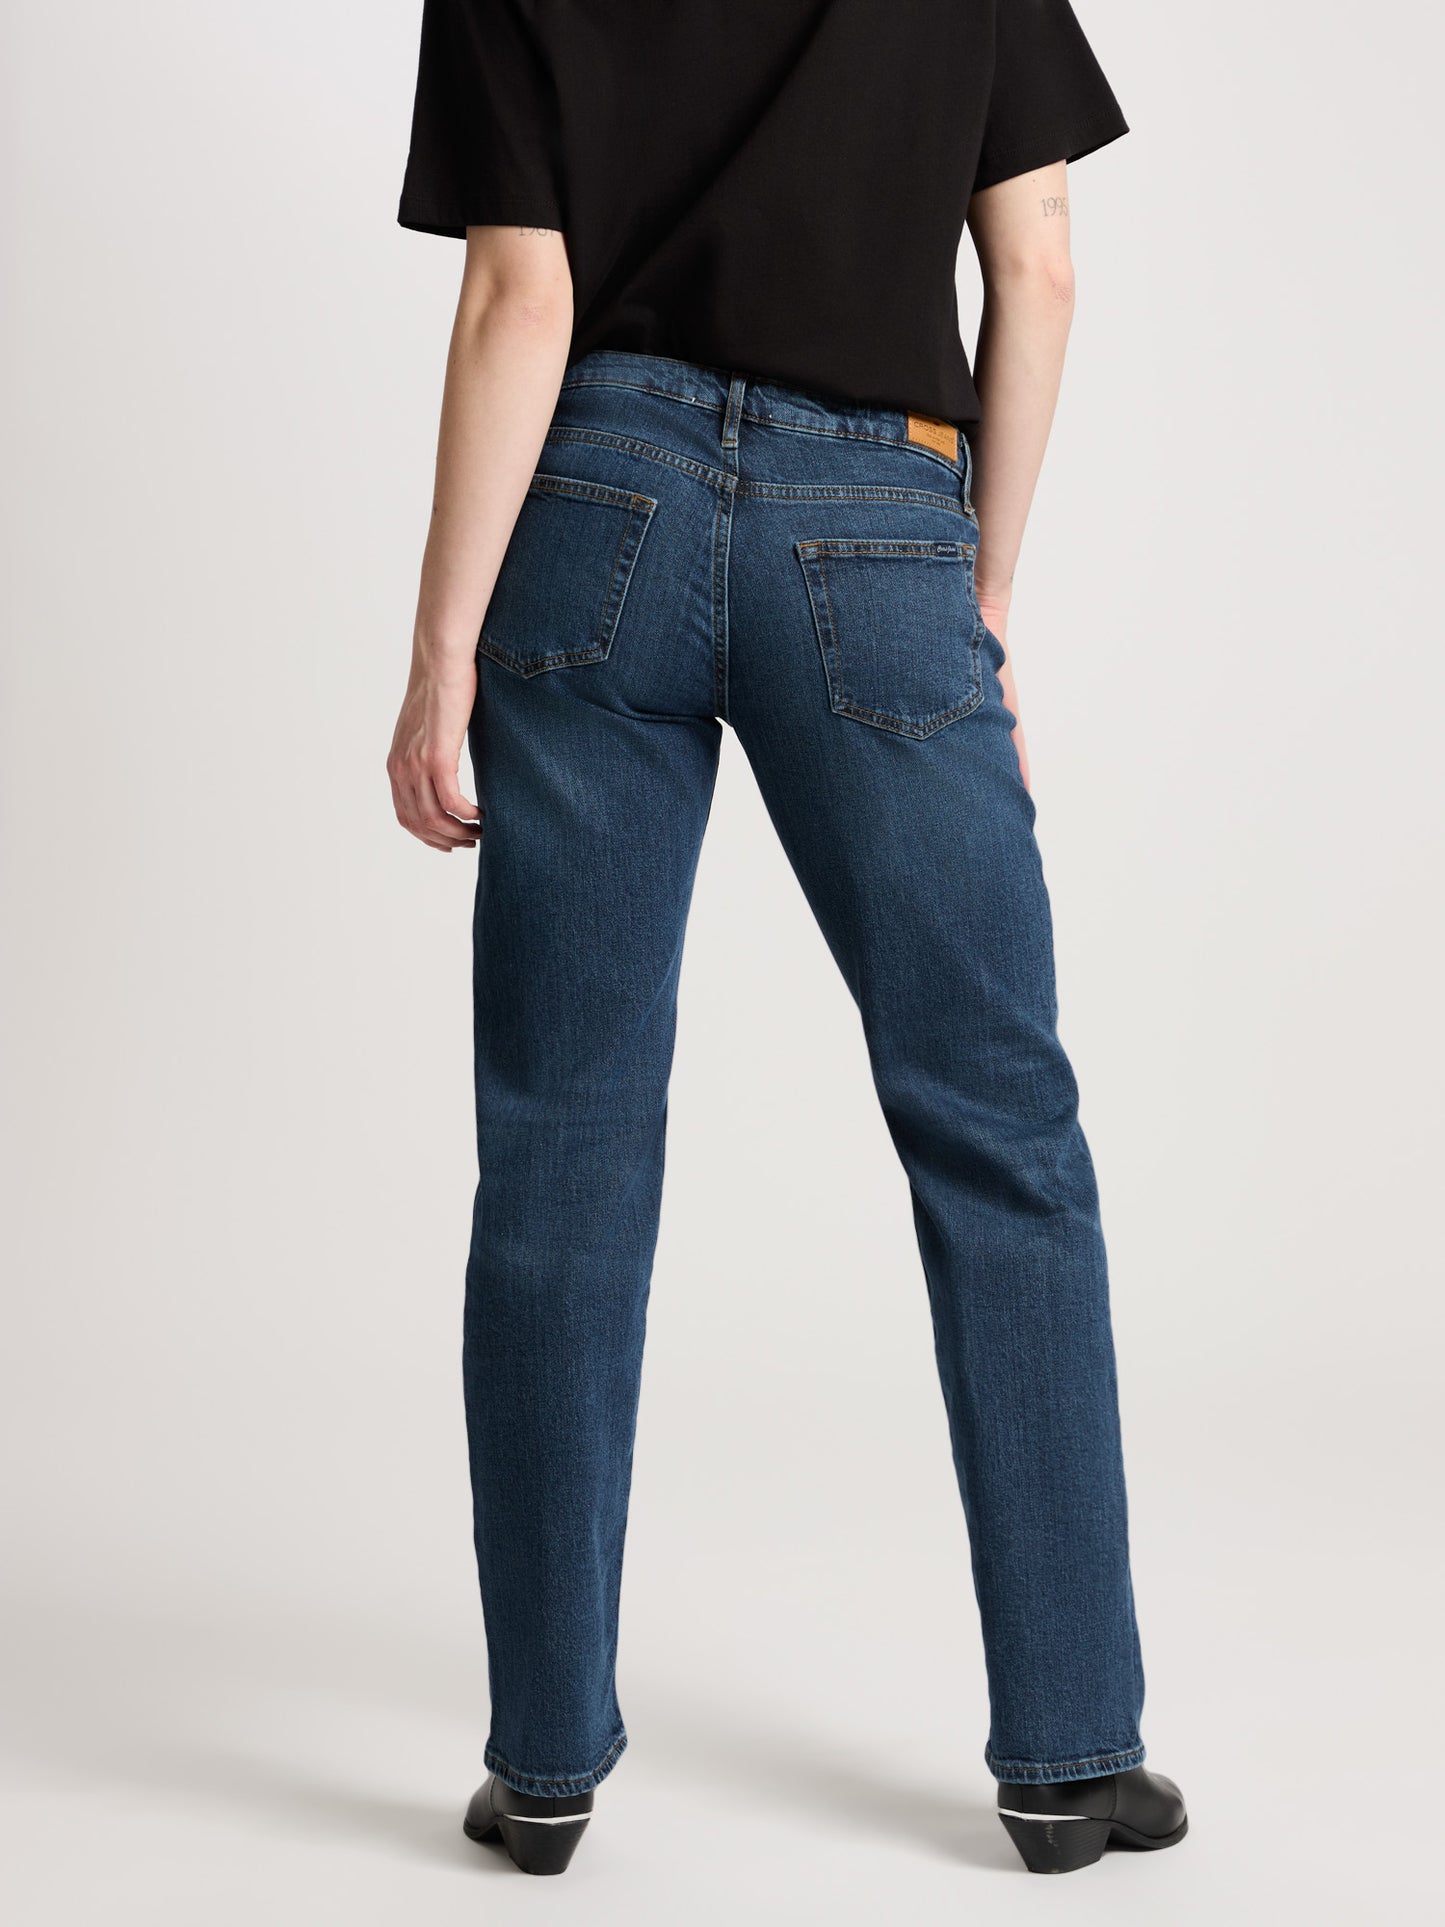 Lily Damen Jeans Straight Fit Low Waist dunkelblau.